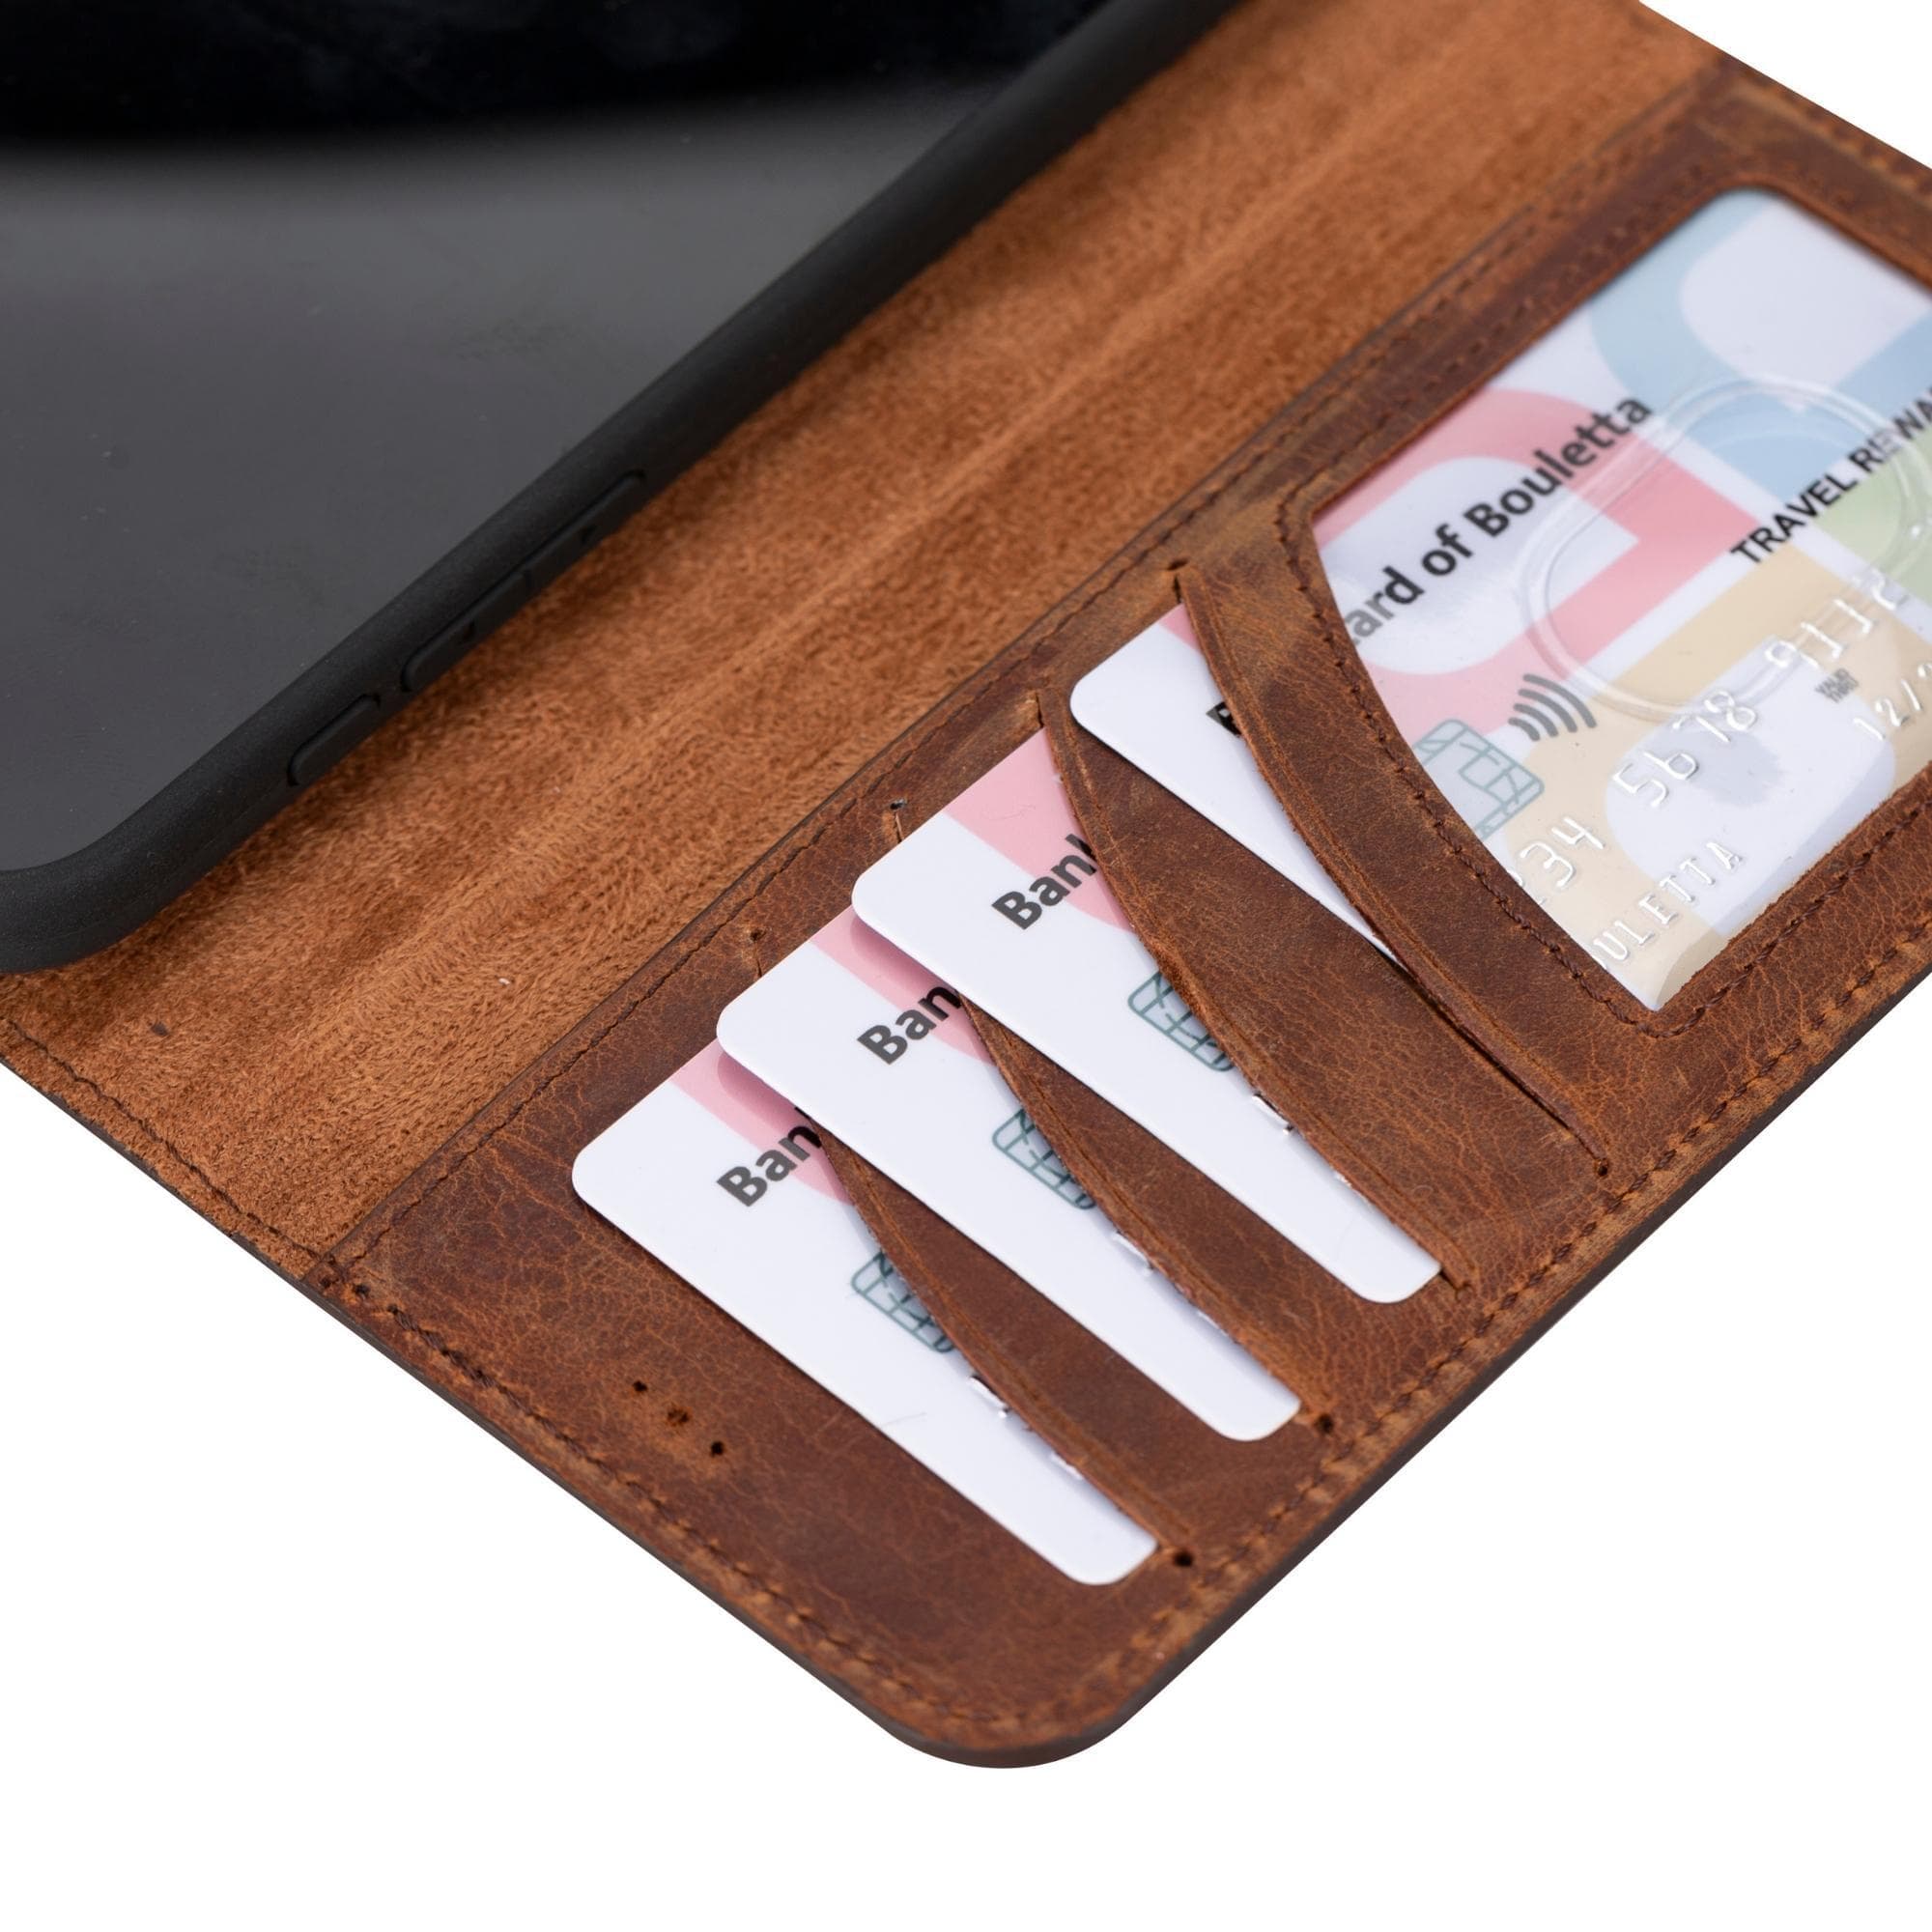 Large Circle Bangle Keychain Wallet - Upgraded ID Card Holder